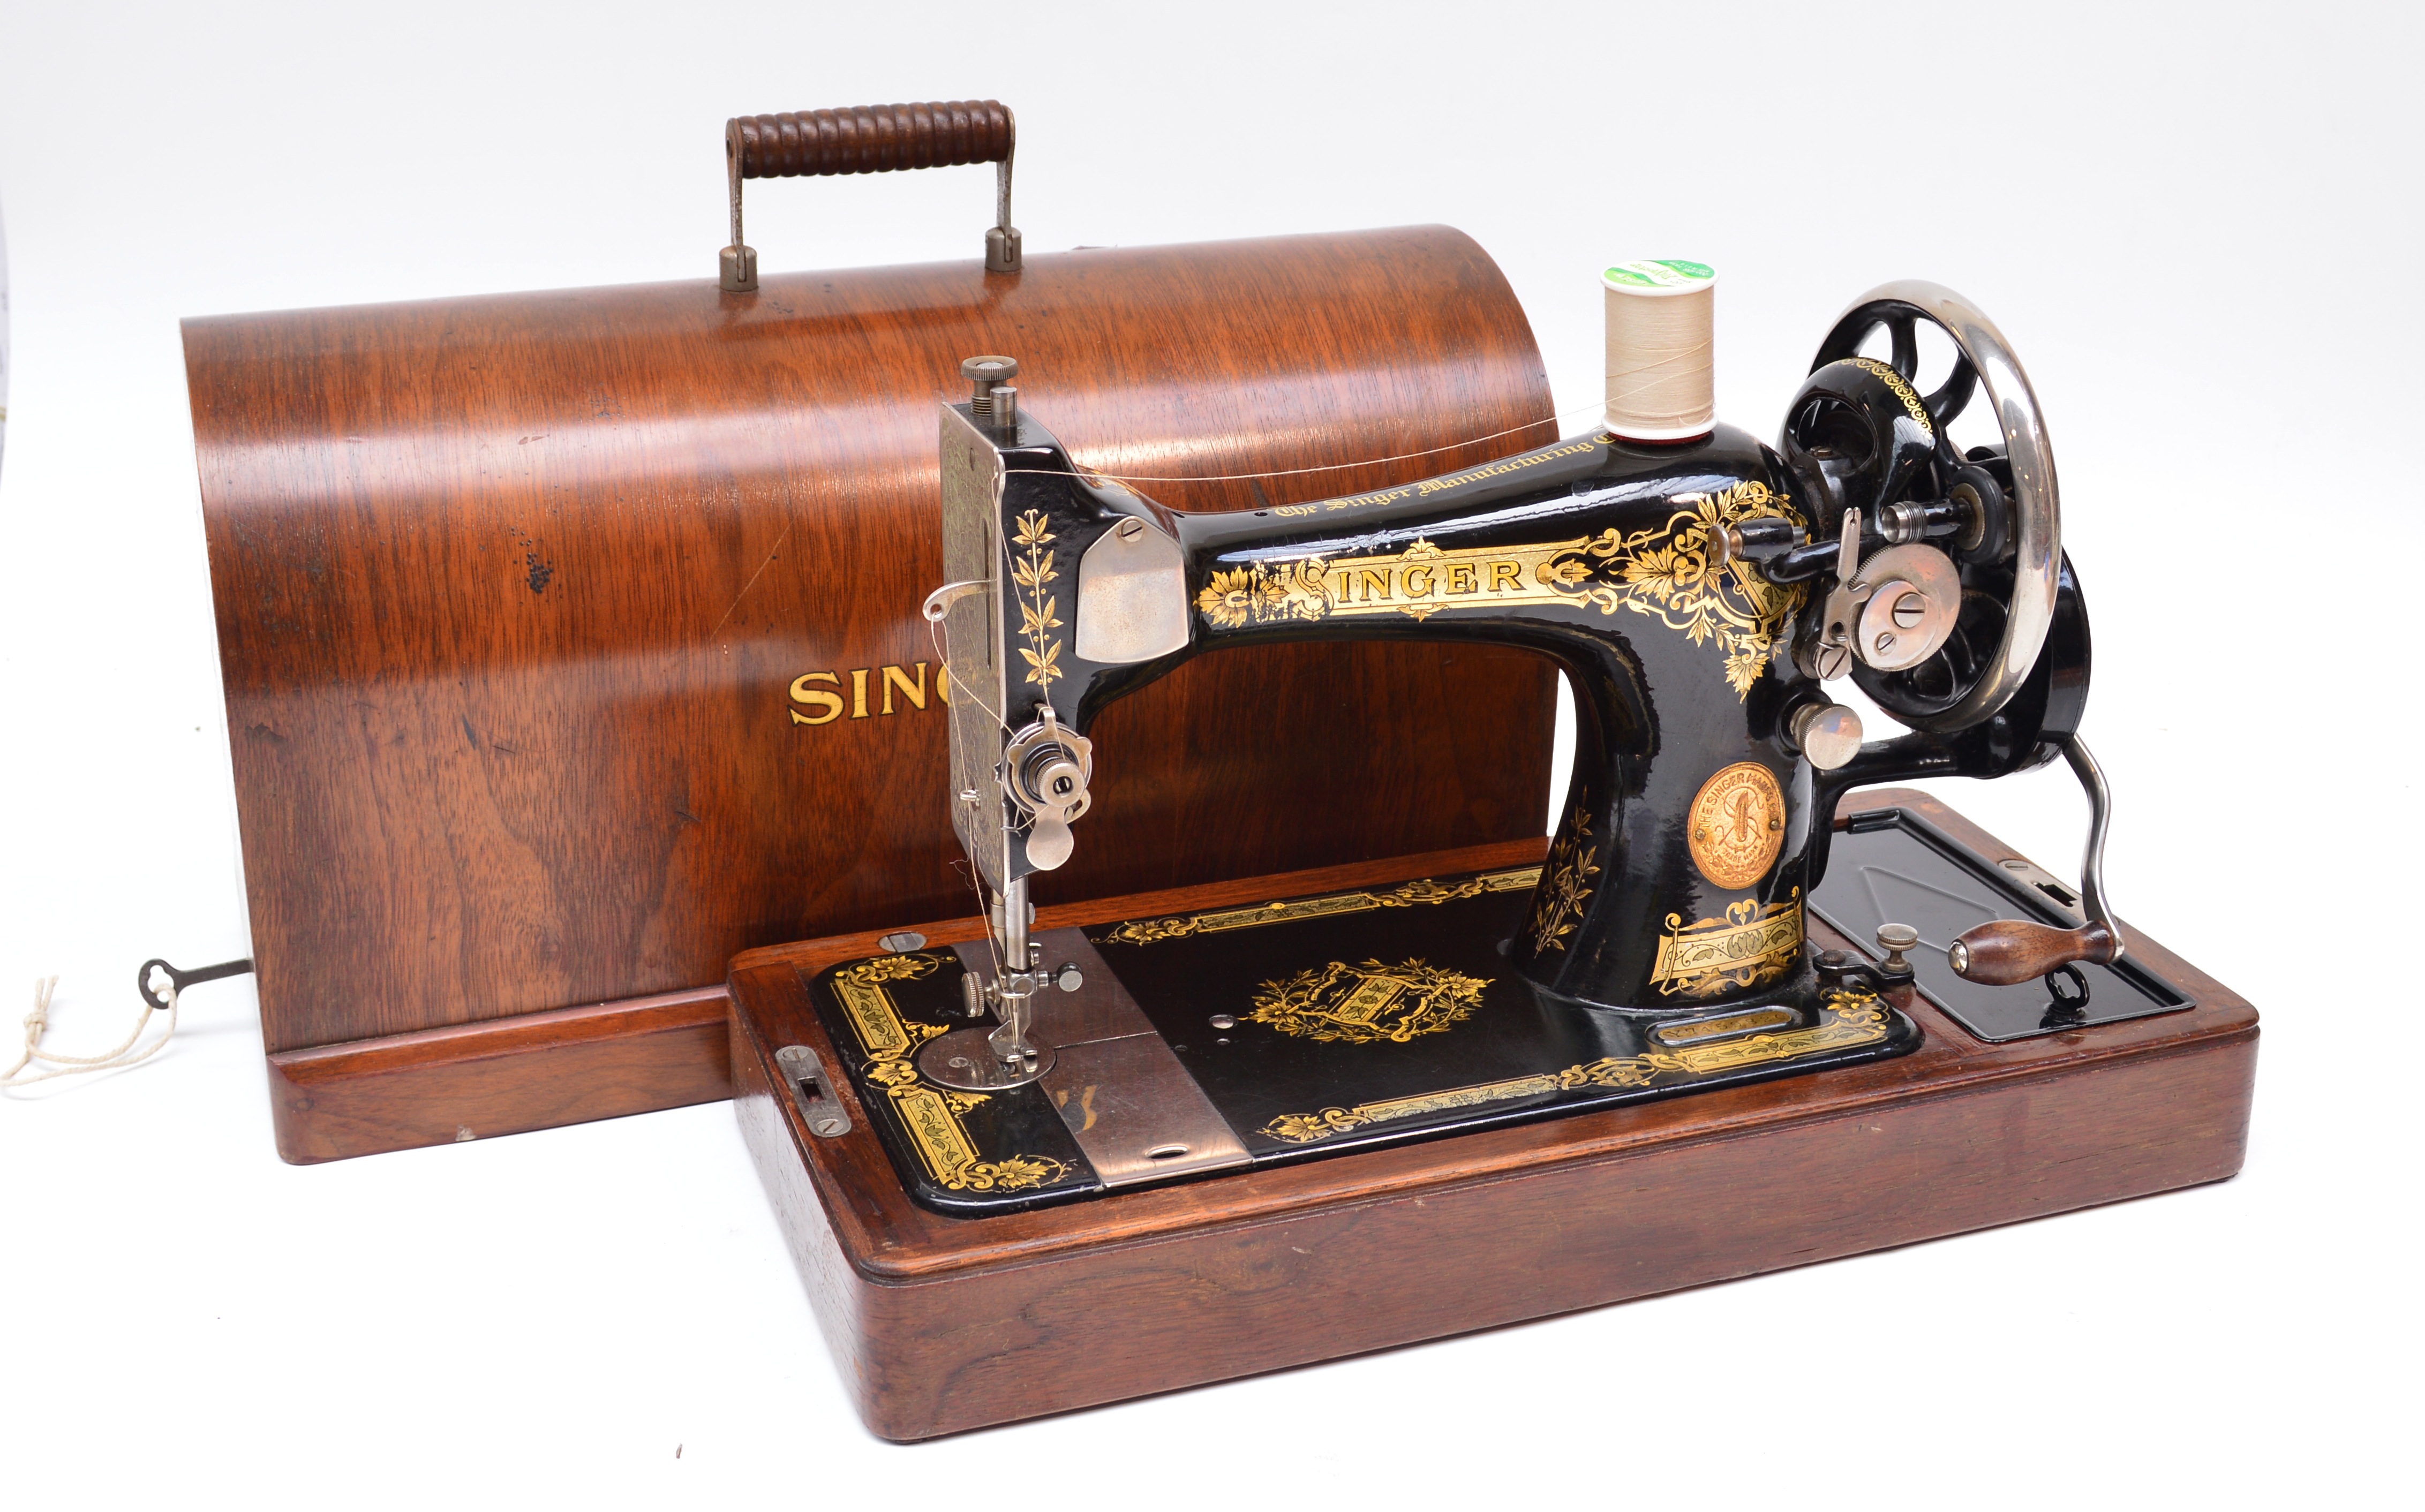 A vintage Singer sewing machine in walnut veneered domed case.